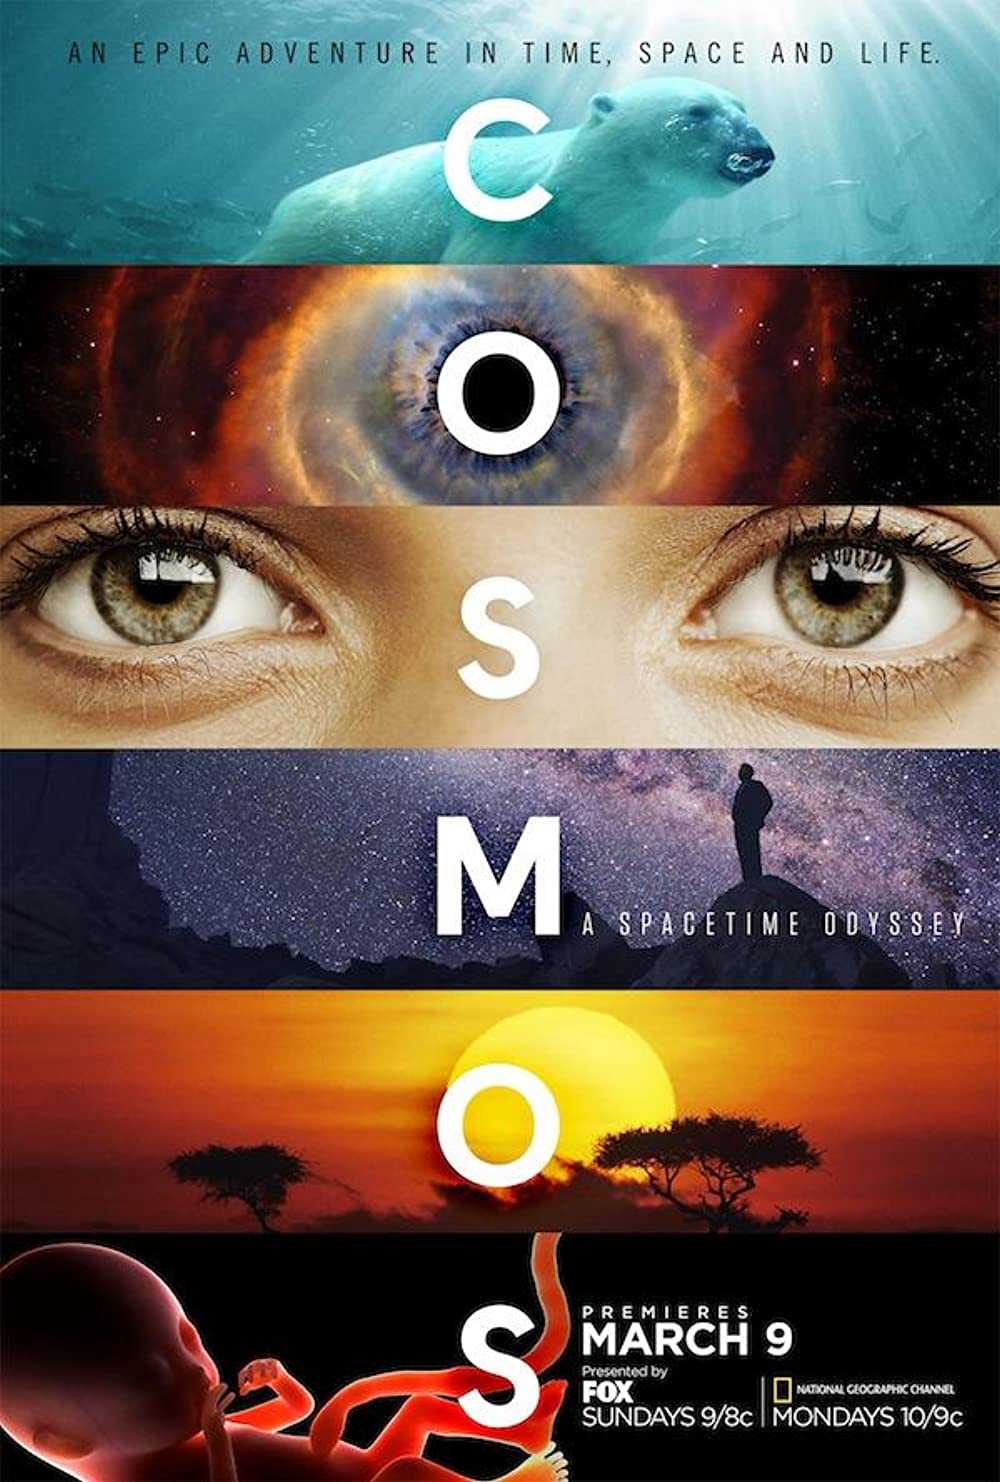 Vũ Trụ Kỳ Diệu Phần 1 - Cosmos: A SpaceTime Odyssey (Season 1)